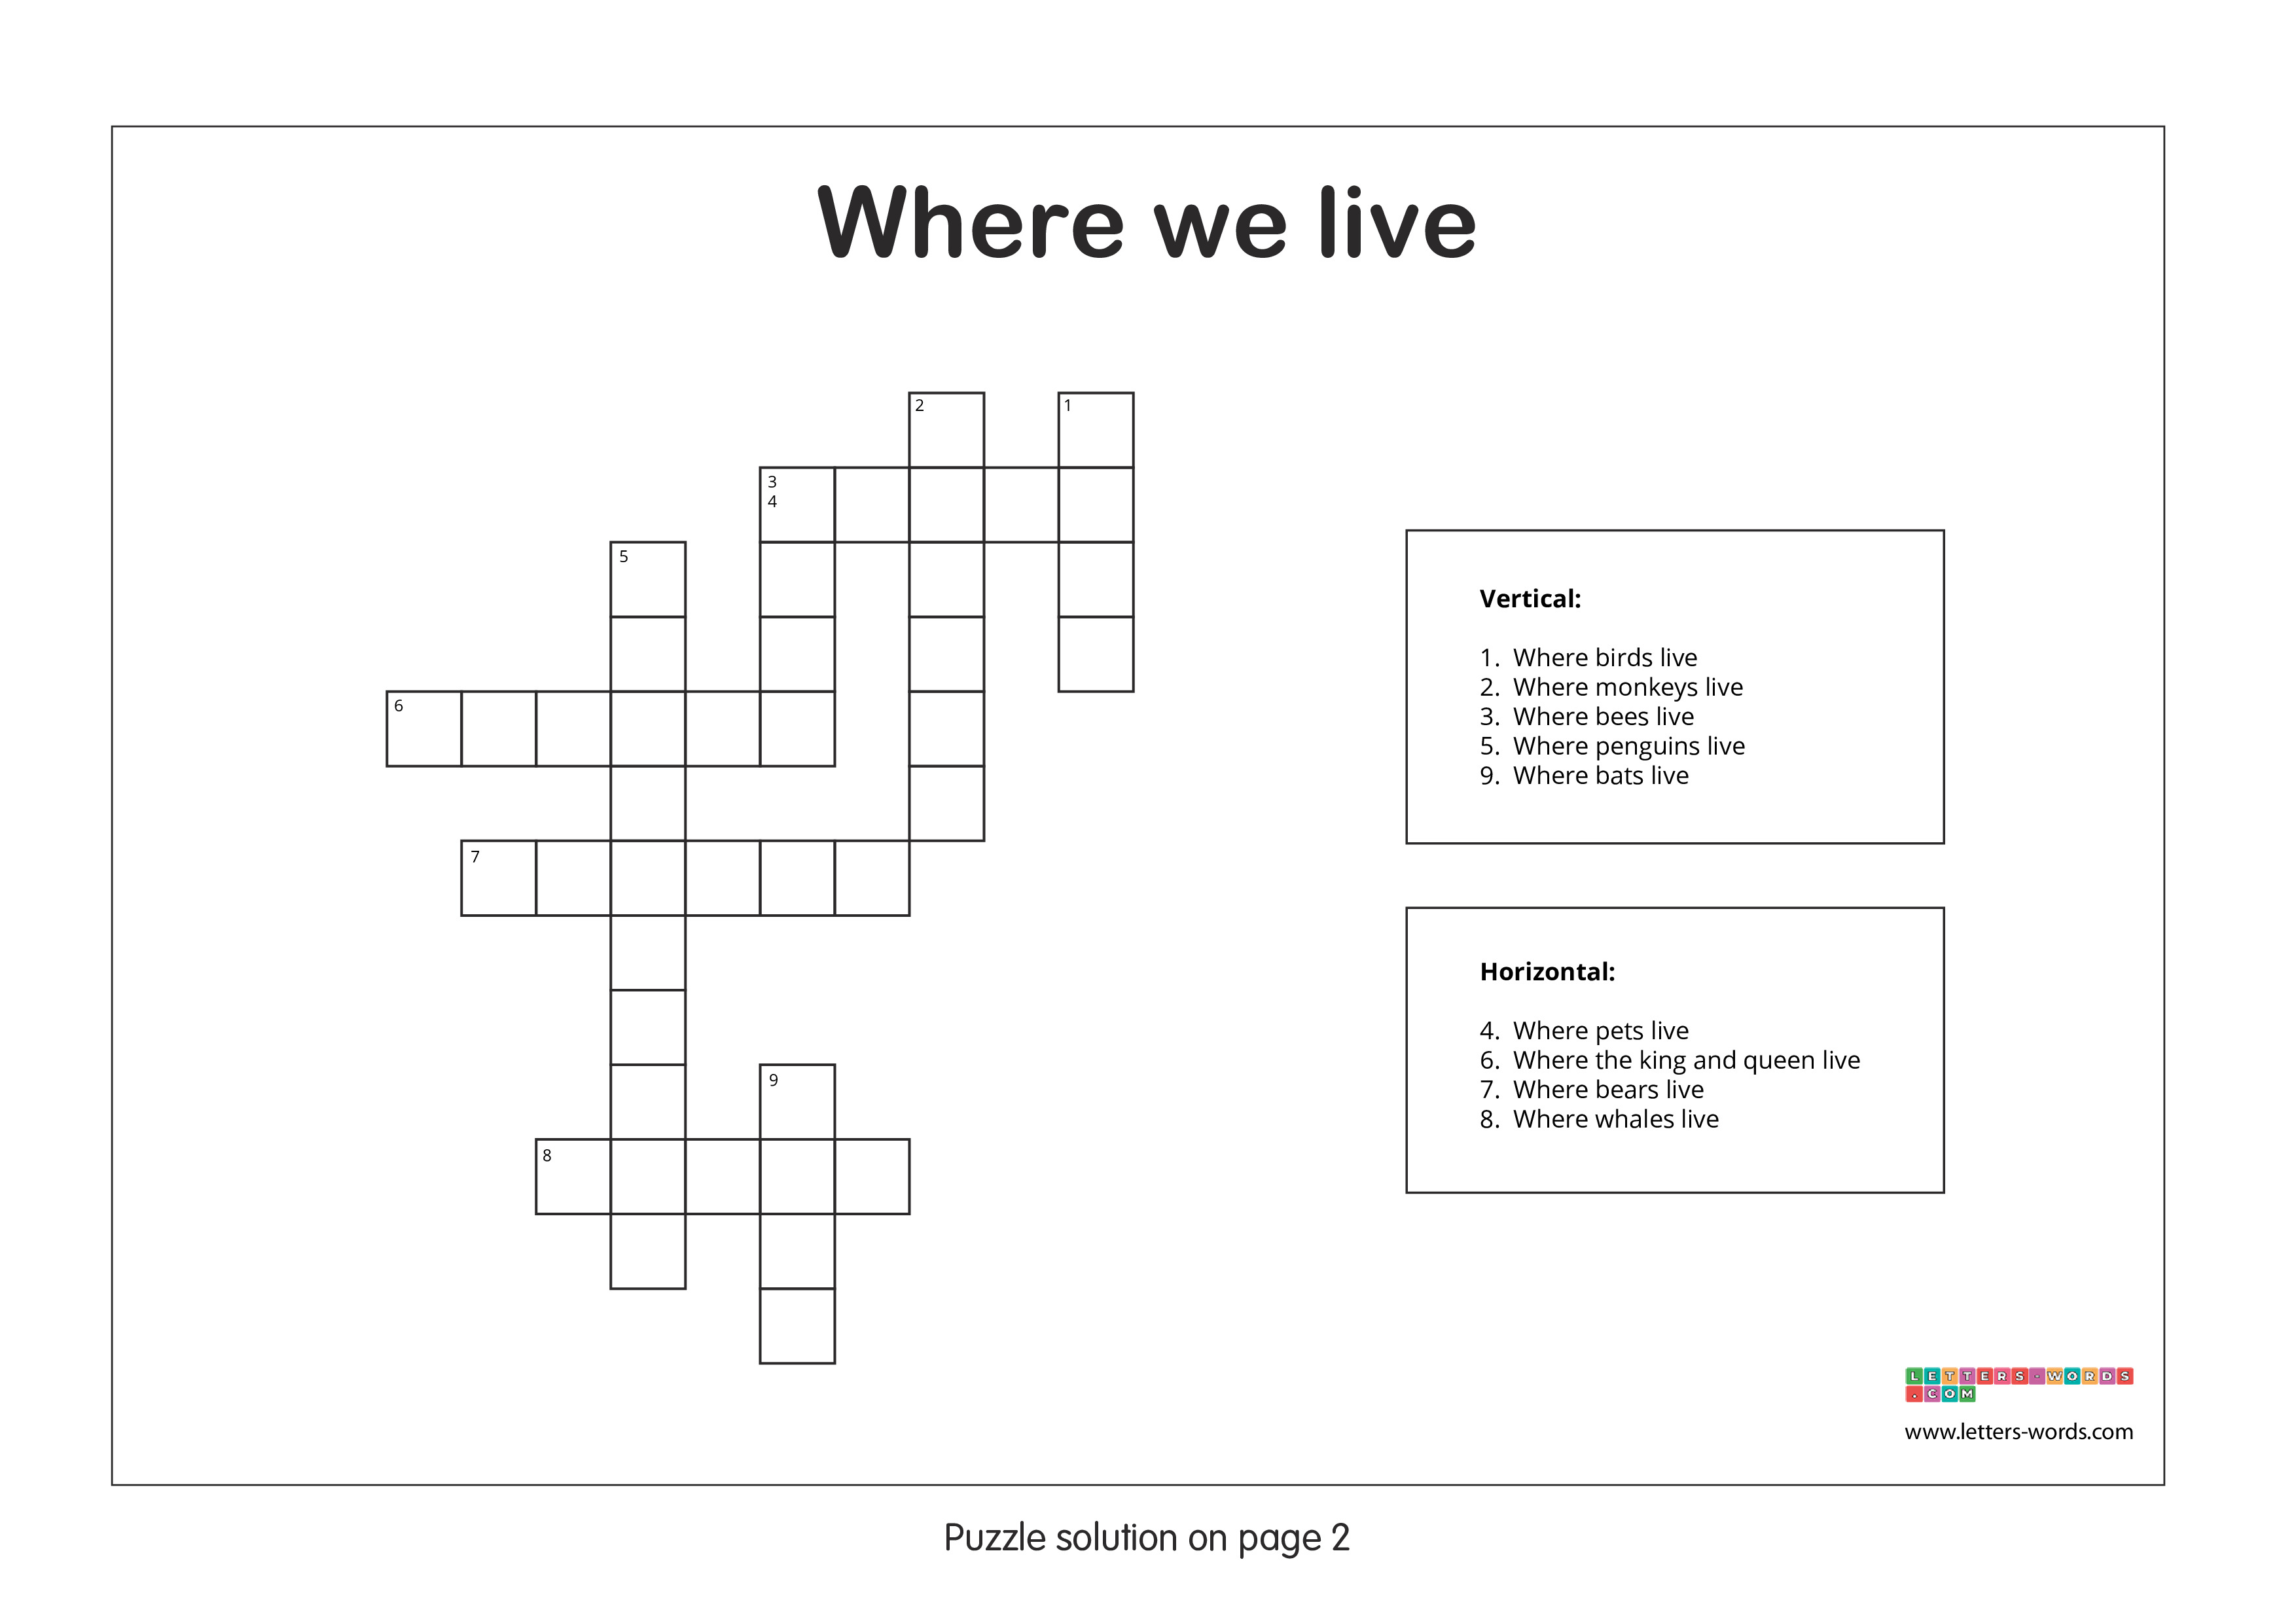 Elementary School Students Crossword Puzzle - Where we live